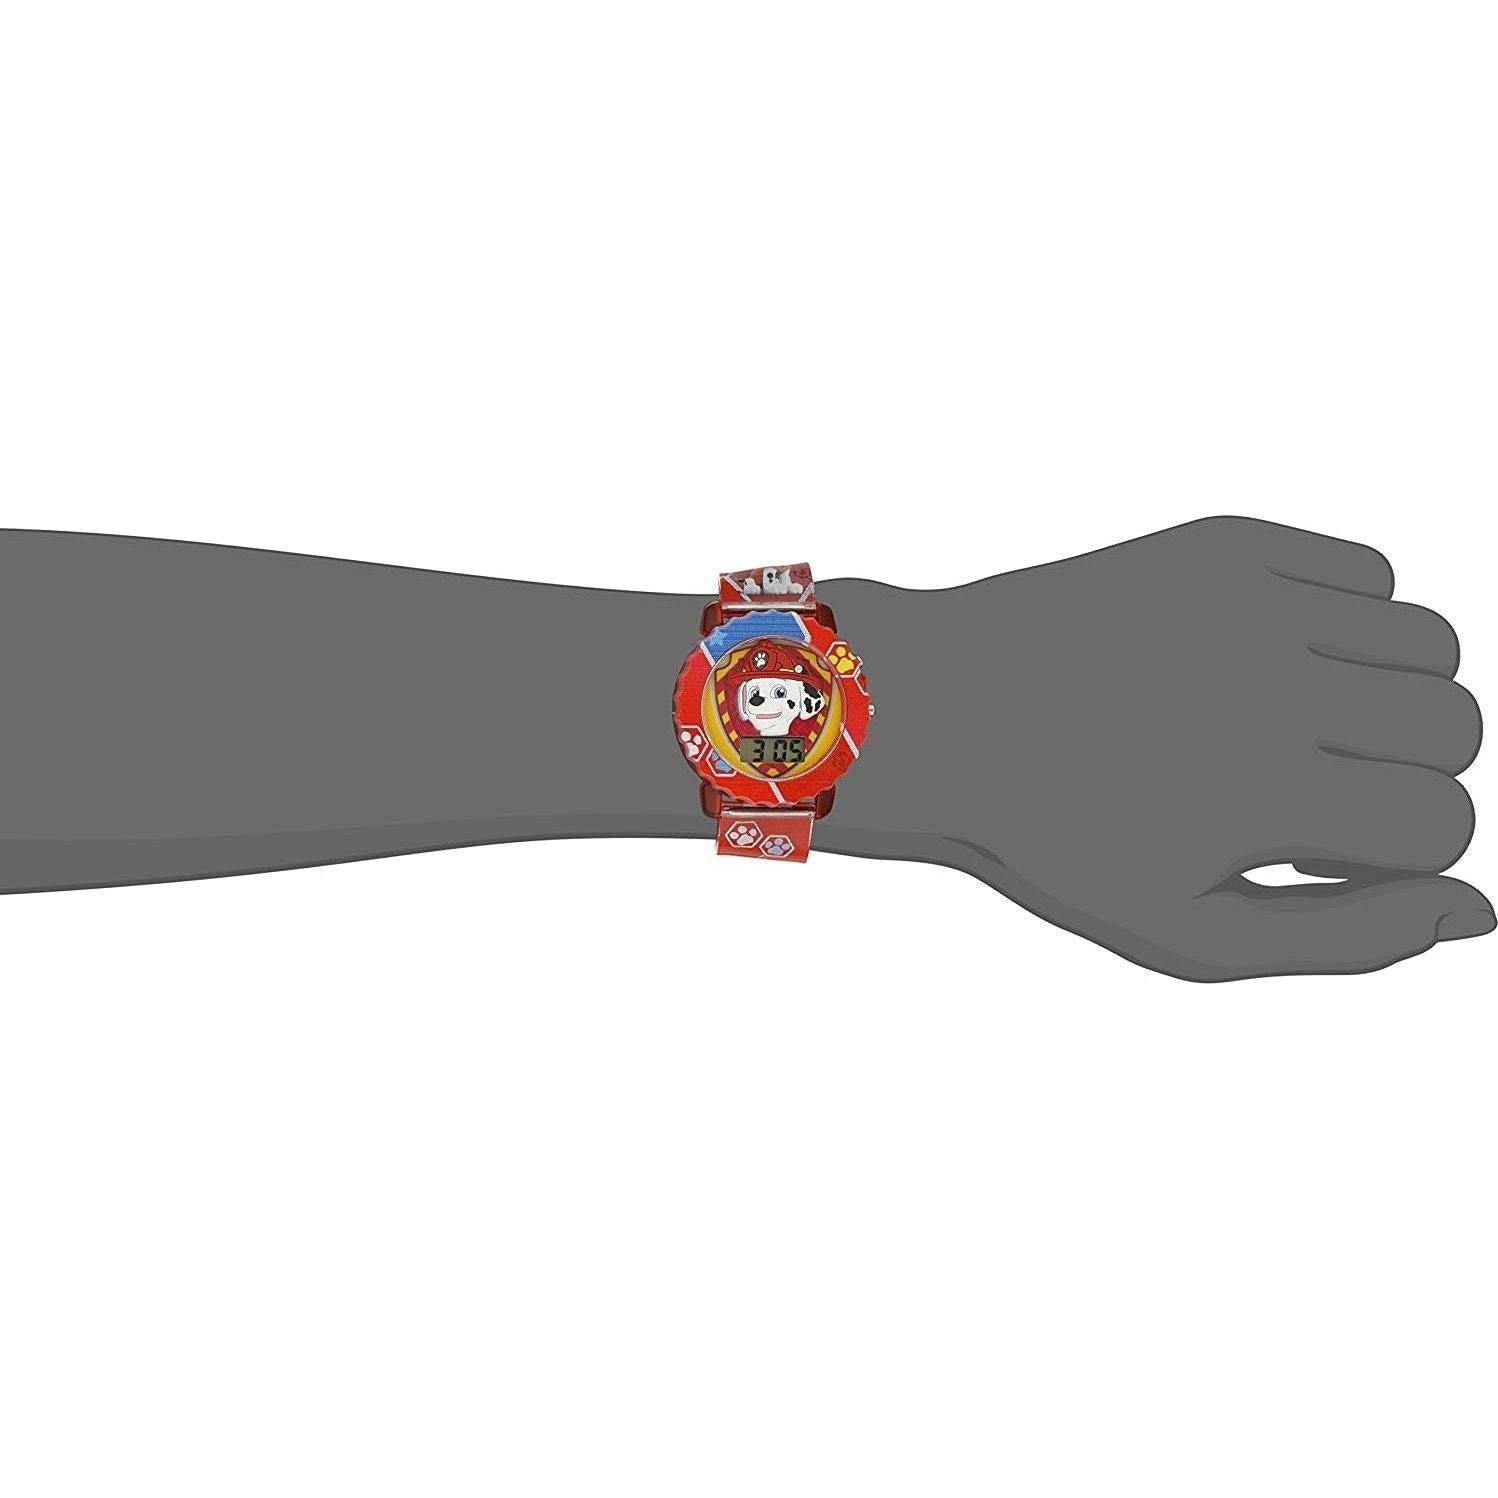 Paw Patrol Kids' Digital Watch with Red Case - Model: PAW4016 - BumbleToys - 5-7 Years, Kids, Paw Patrol, Pre-Order, Watch